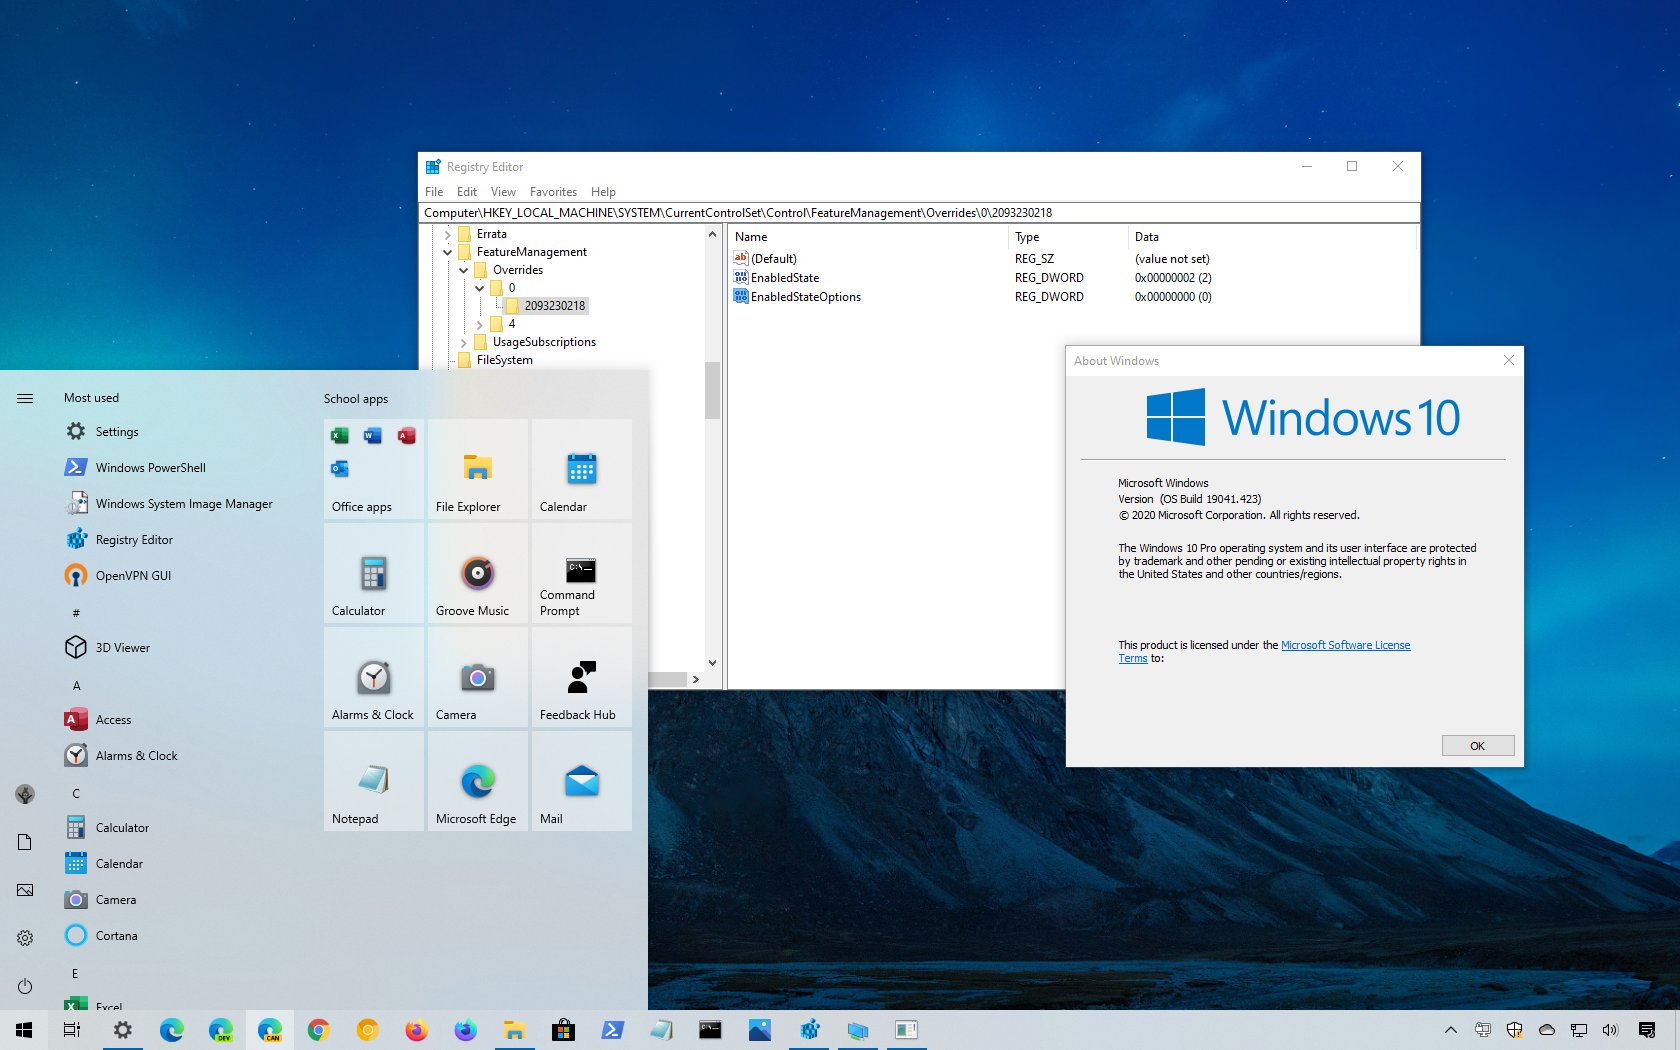 How to enable new Start menu design on Windows 10 2004 - Pureinfotech